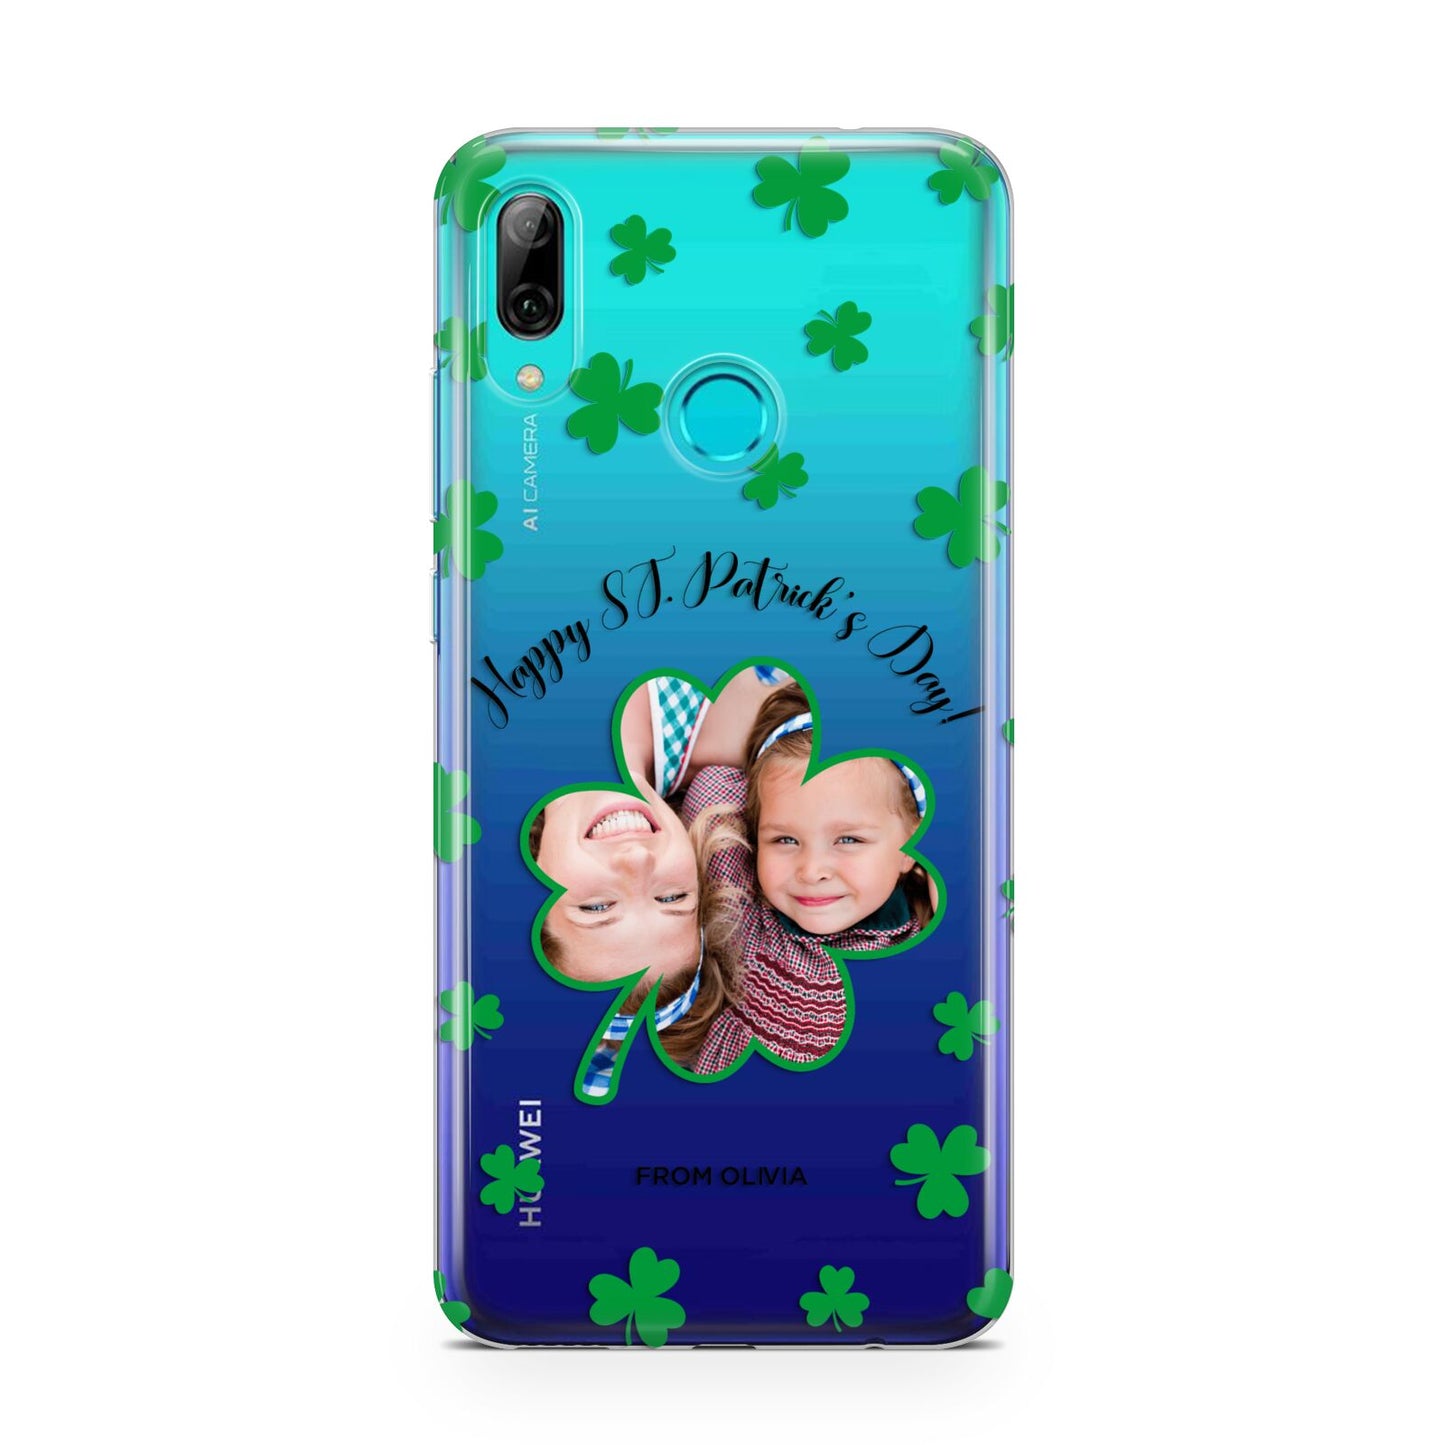 St Patricks Day Photo Upload Huawei P Smart 2019 Case